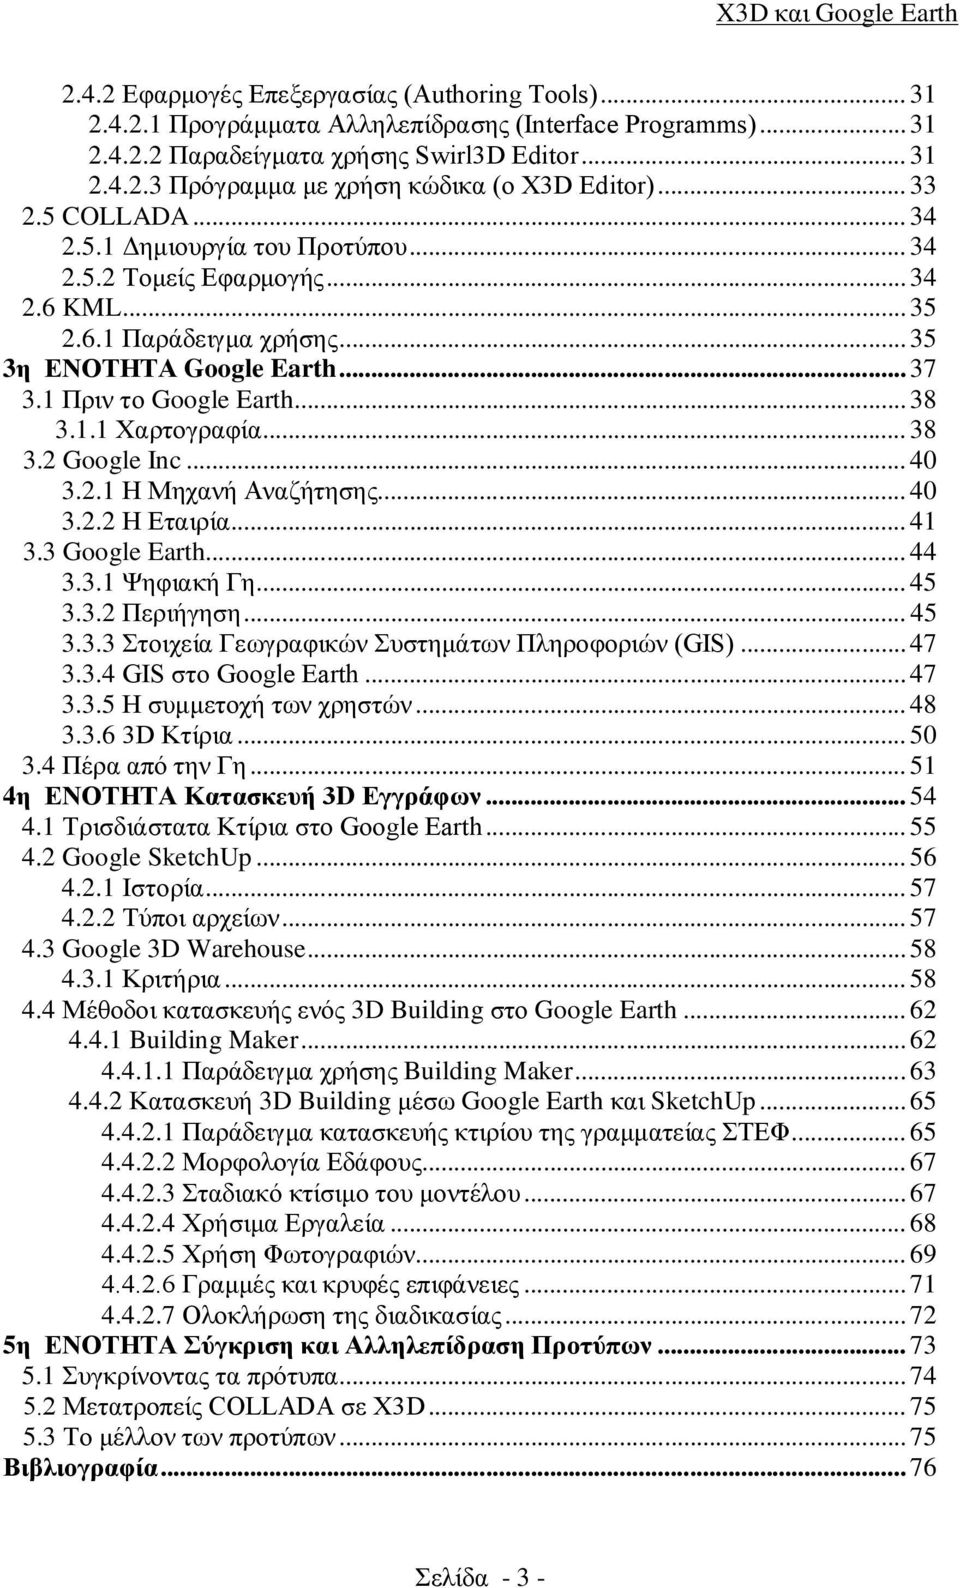 .. 38 3.2 Google Inc... 40 3.2.1 Η Μηχανή Αναζήτησης... 40 3.2.2 Η Εταιρία... 41 3.3 Google Earth... 44 3.3.1 Ψηφιακή Γη... 45 3.3.2 Περιήγηση... 45 3.3.3 Στοιχεία Γεωγραφικών Συστημάτων Πληροφοριών (GIS).